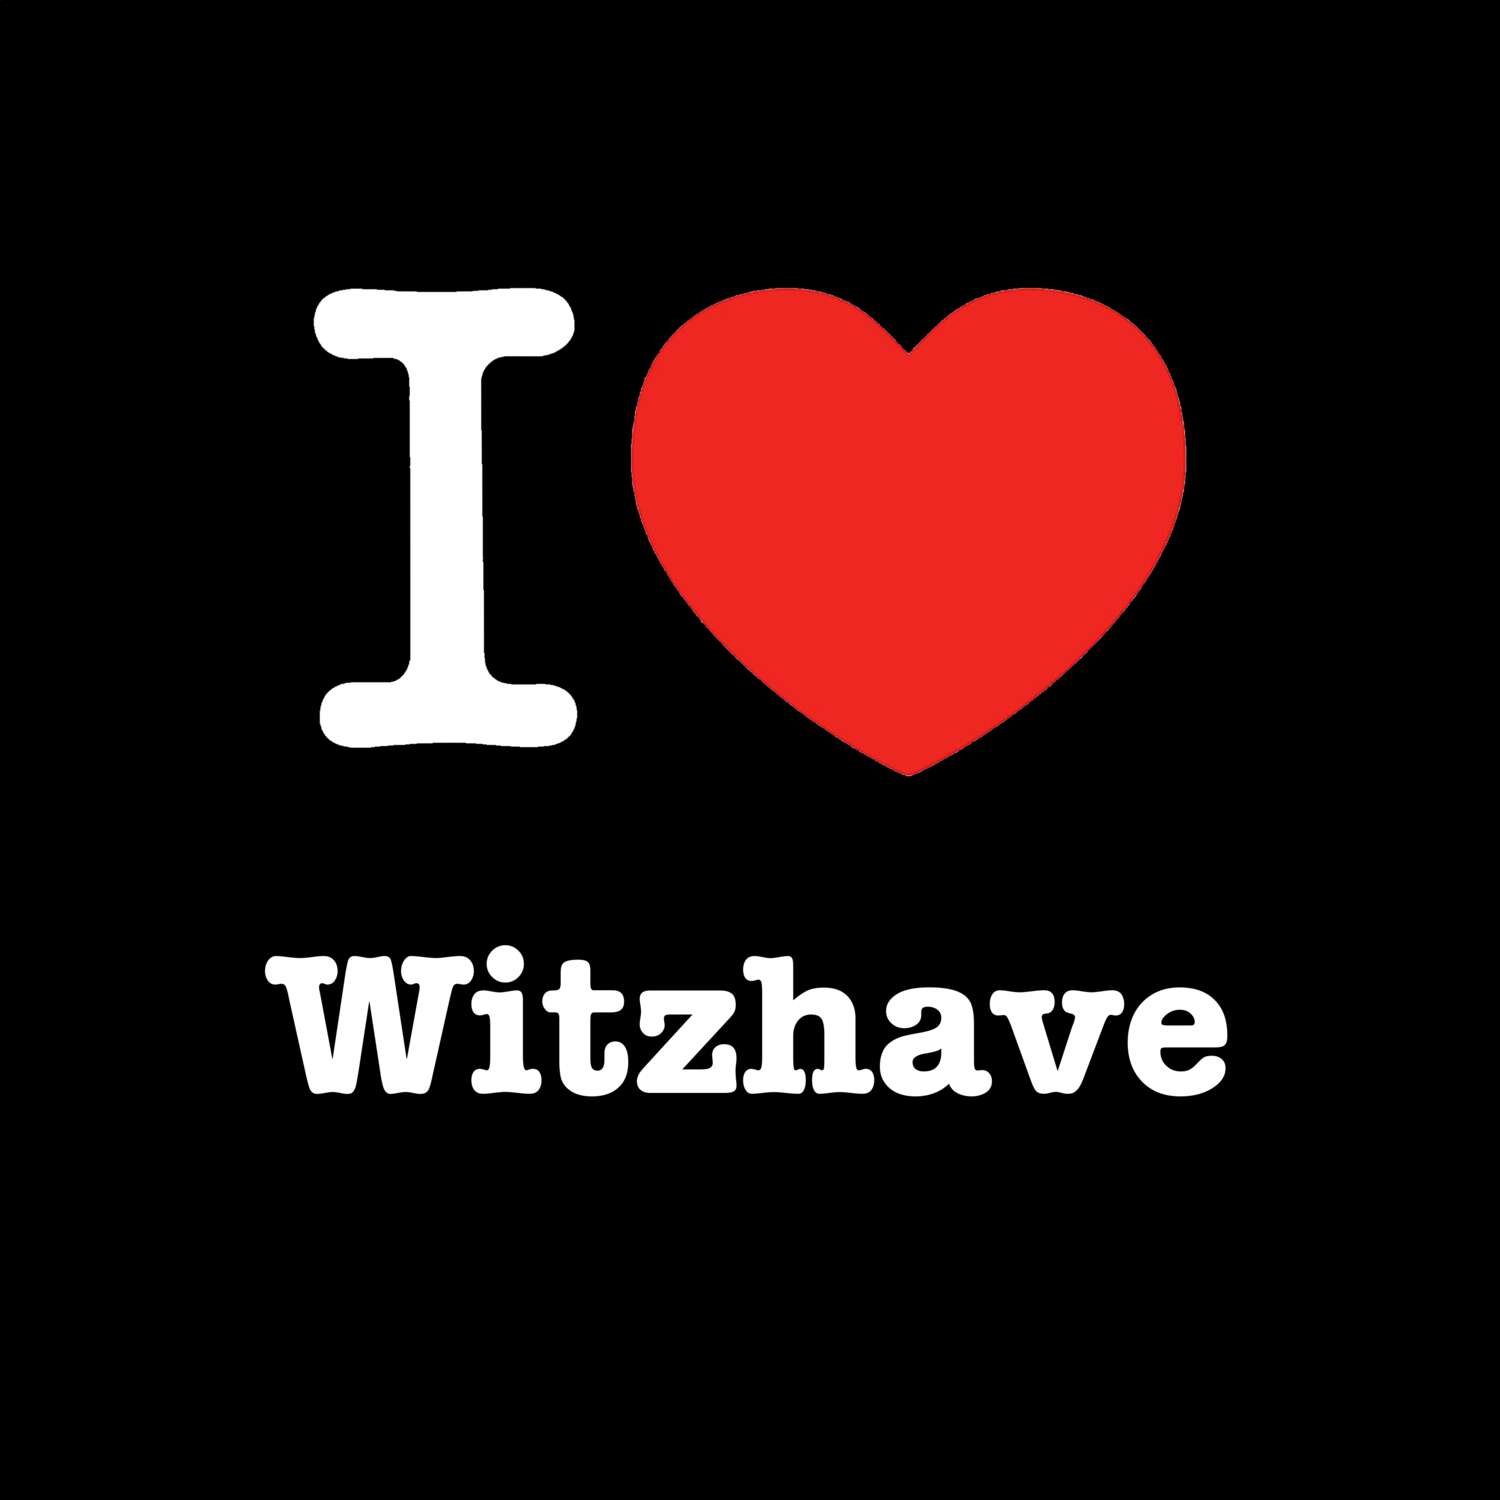 Witzhave T-Shirt »I love«